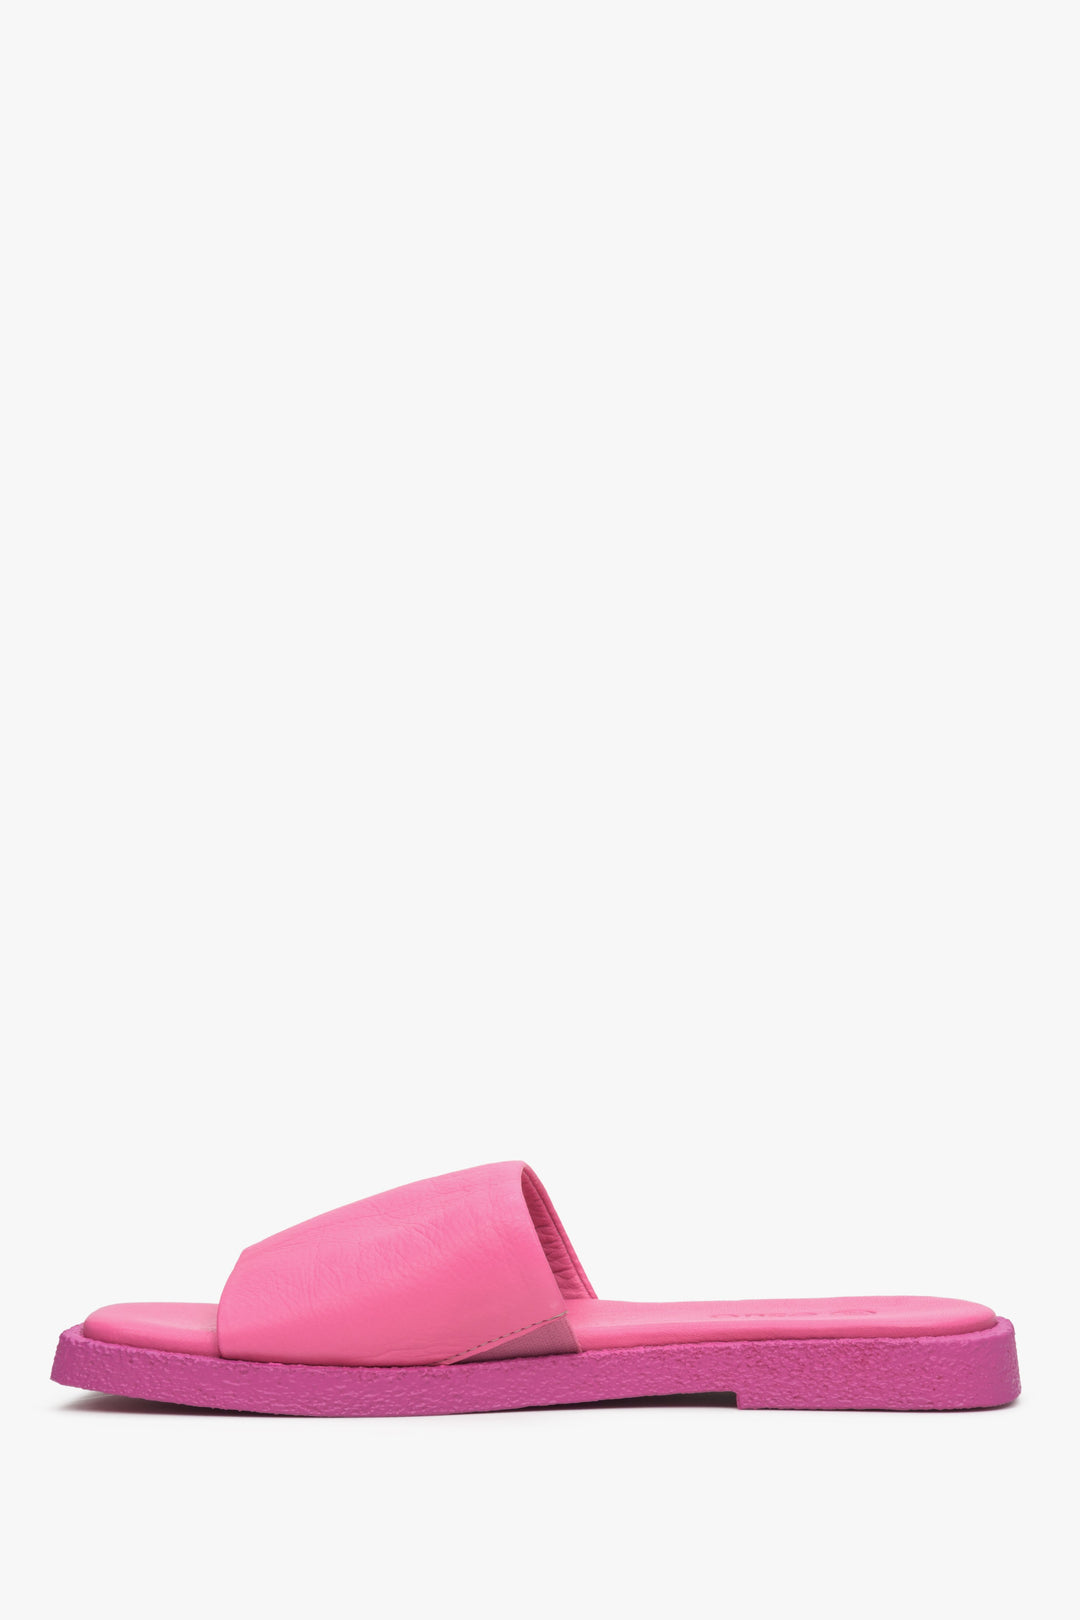 Women's Estro leather flat slide sandals in pink - shoe profile.